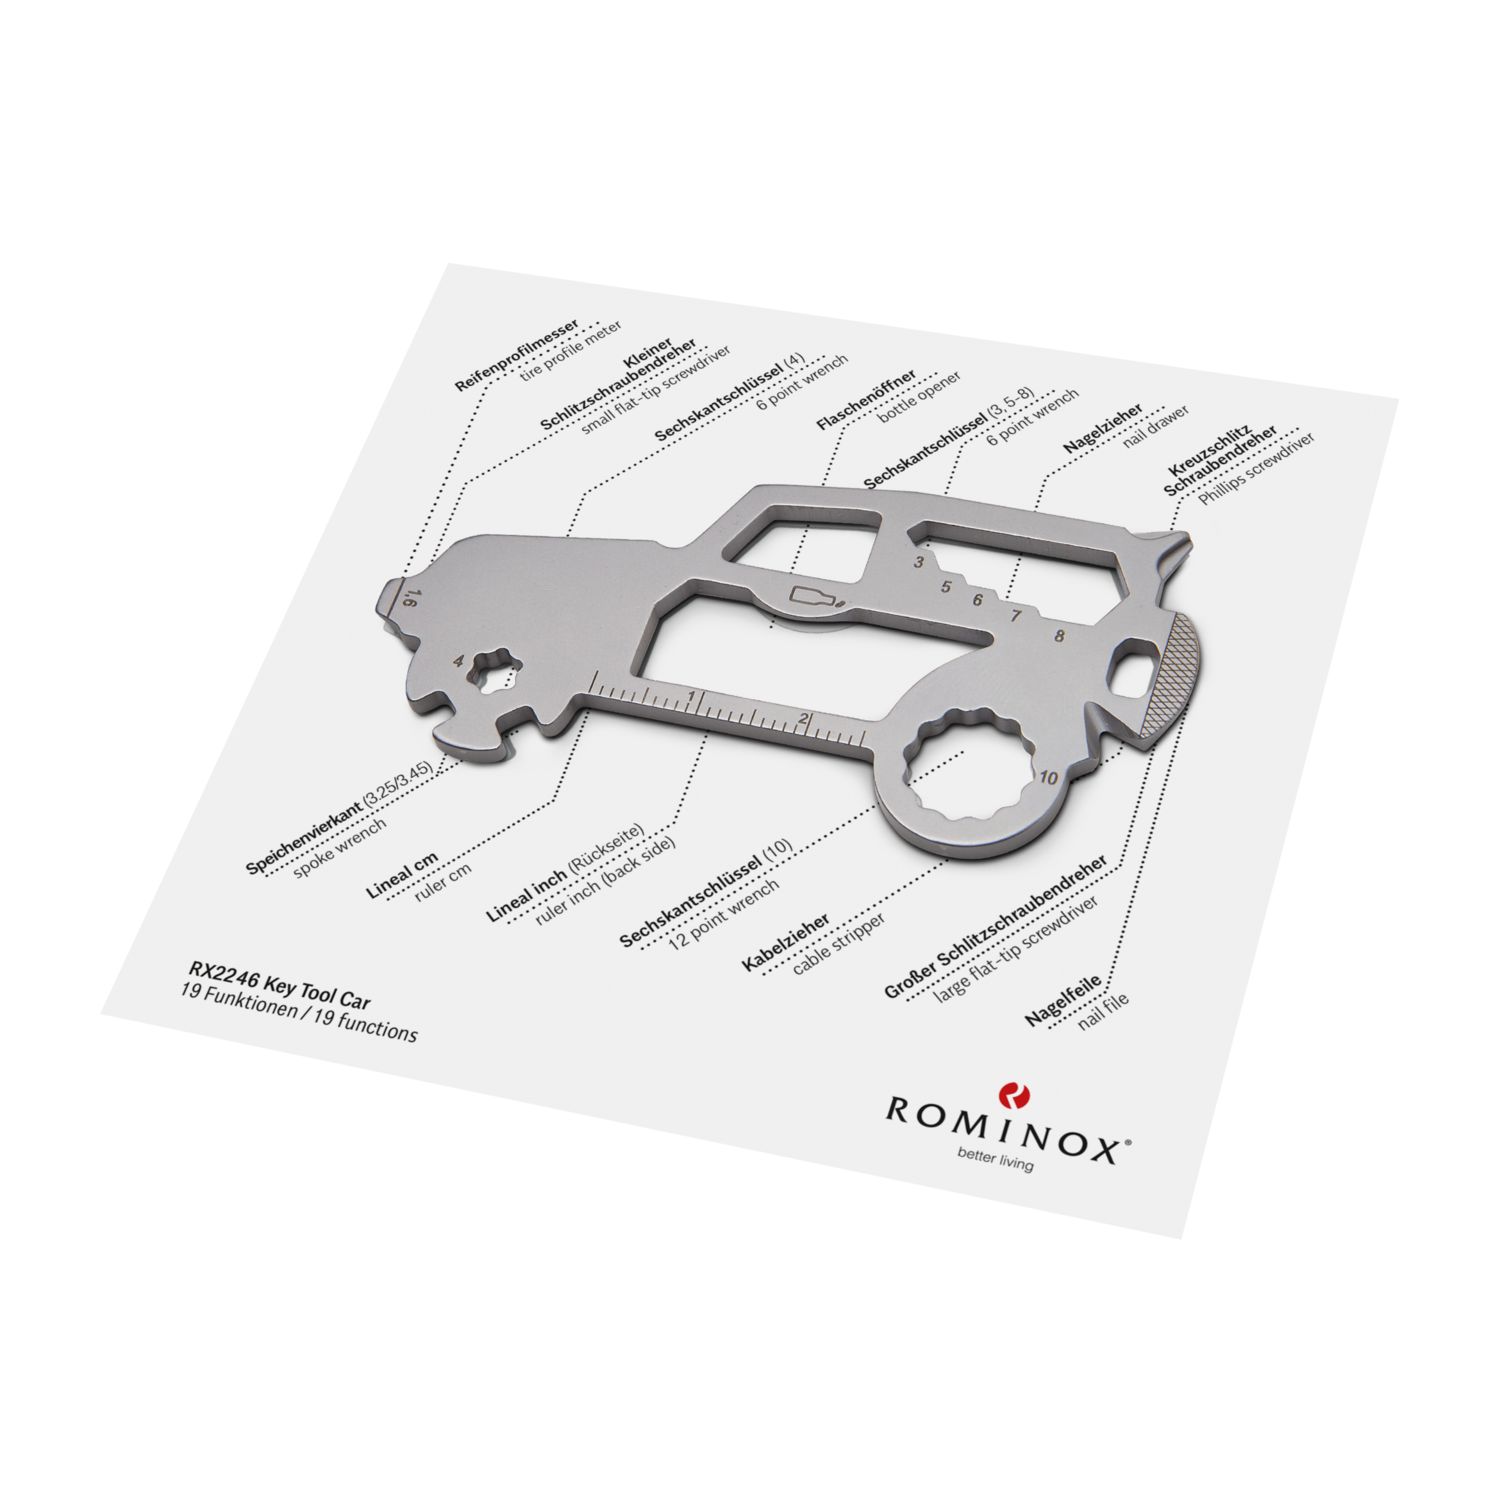 ROMINOX® Key Tool SUV (19 Funktionen) Danke 2K2103e